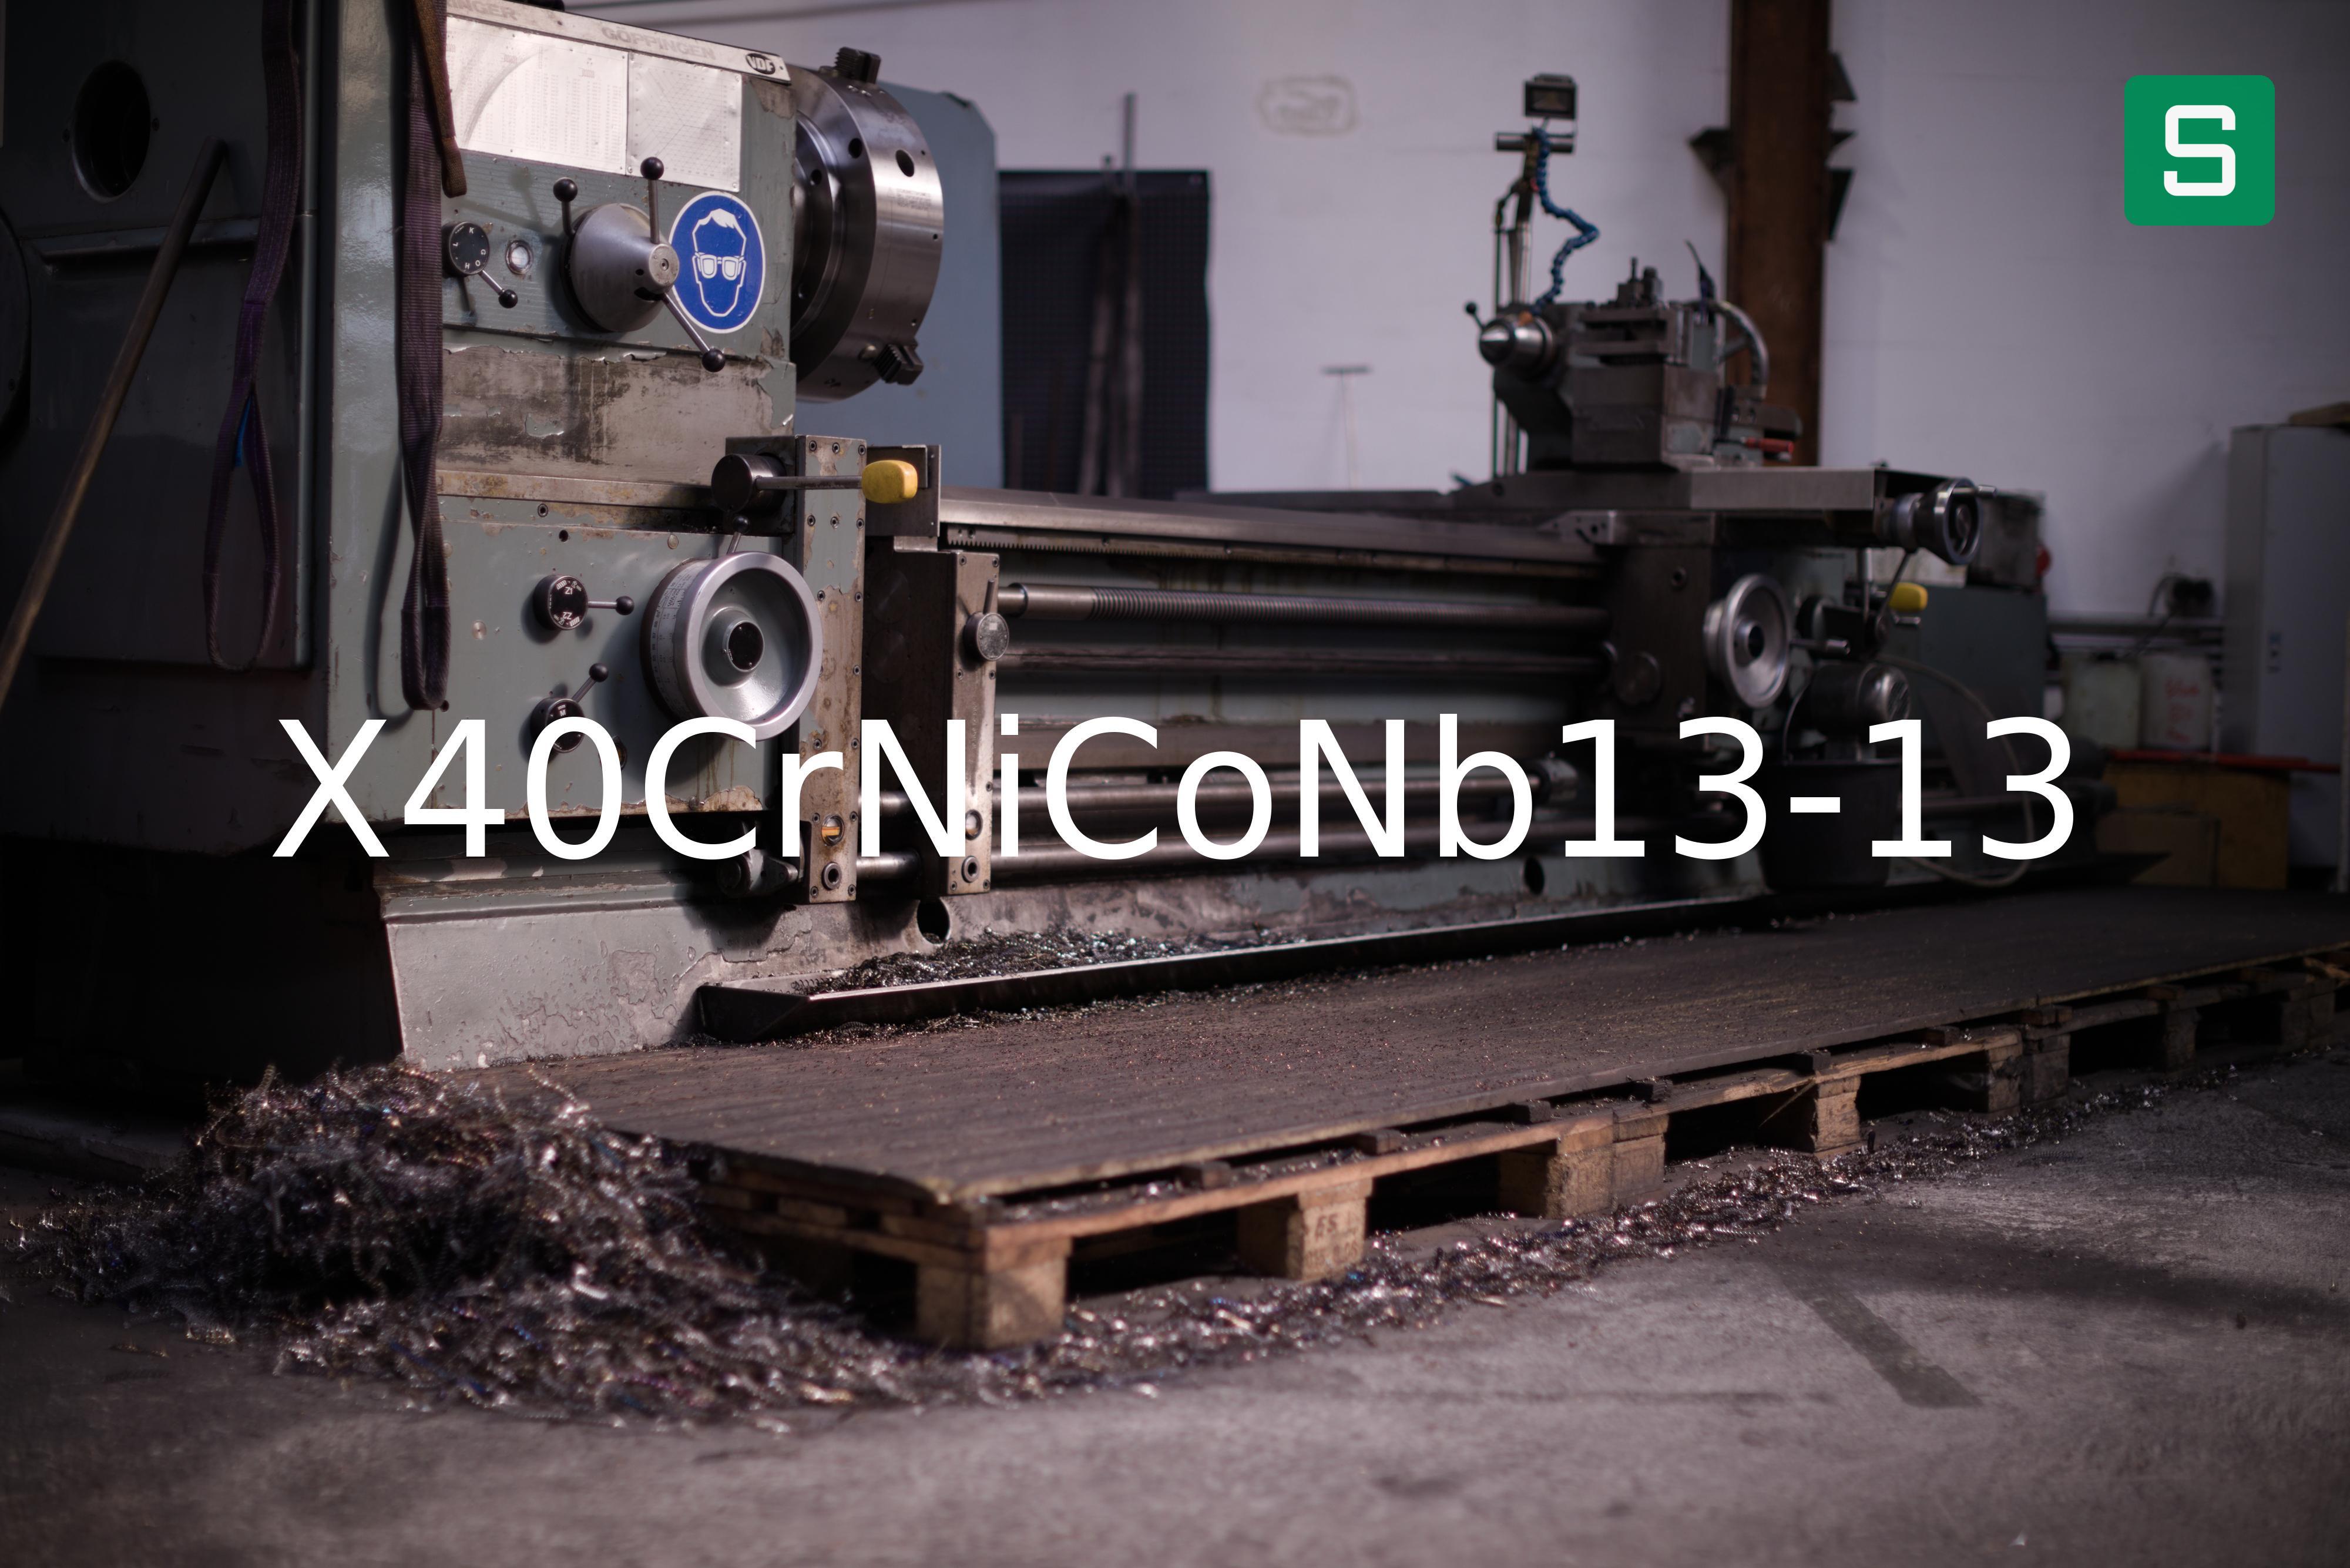 Steel Material: X40CrNiCoNb13-13